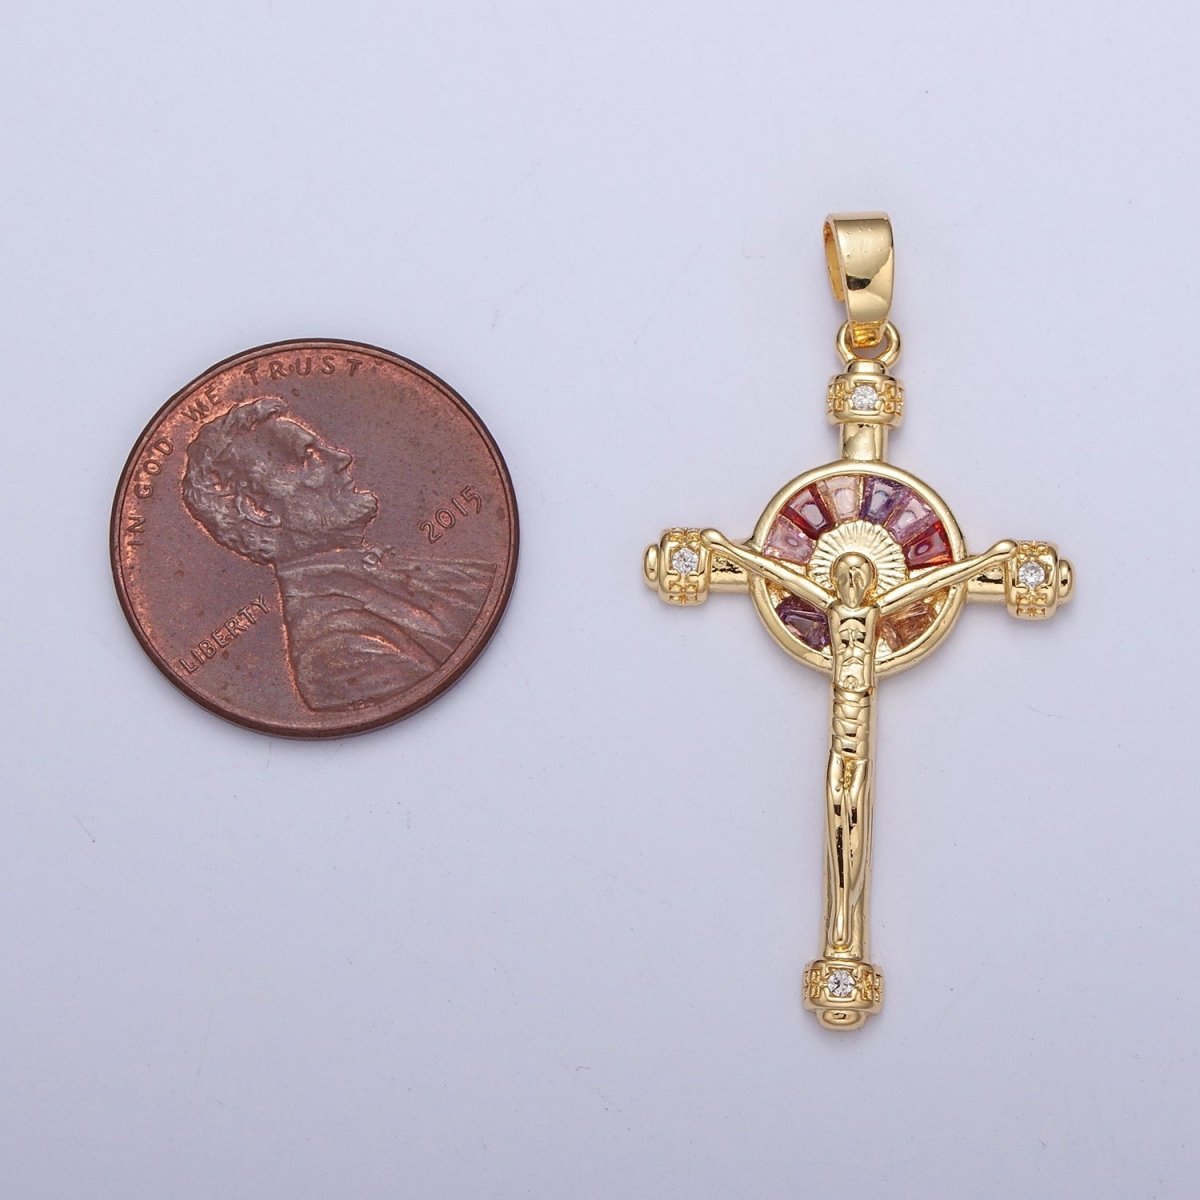 GOLD Baguette CZ Cross Charm Necklace Pendant Religious Christian Catholic Jesus Crucifix Pendant Rosary Cross Charm X-346 X-347 - DLUXCA